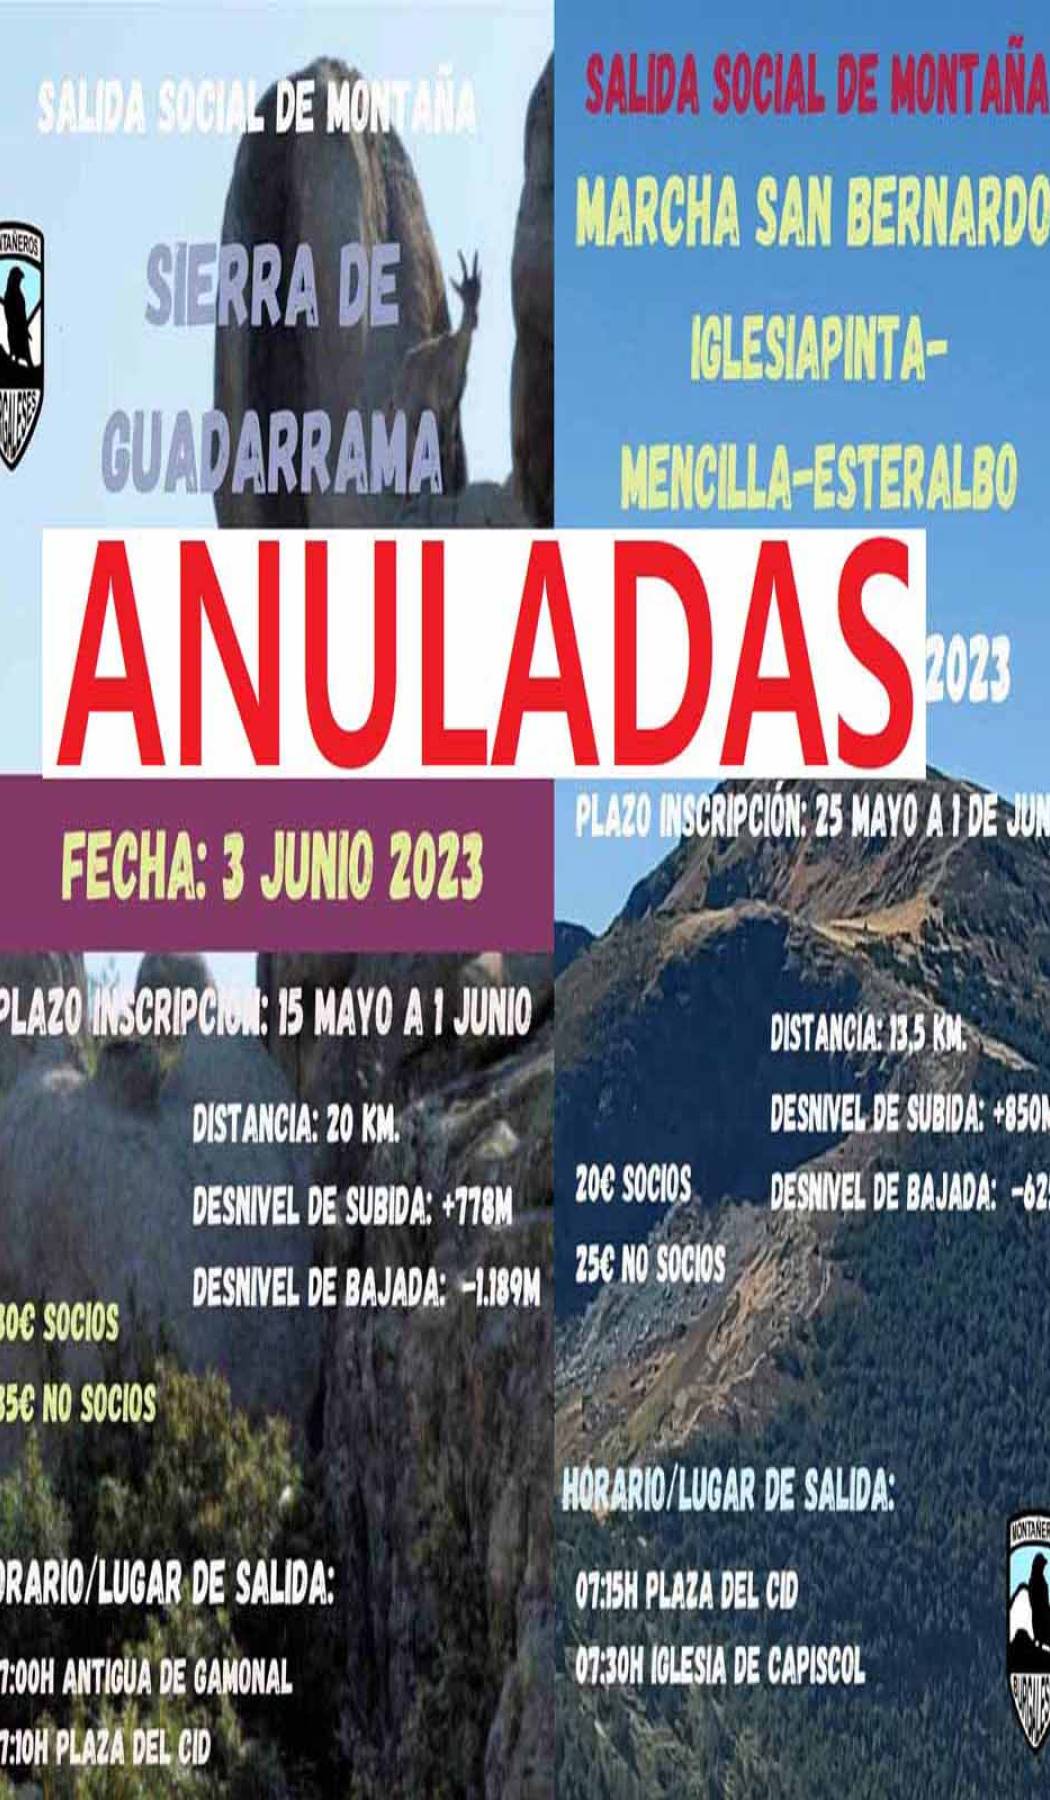 ANULADAS salidas sociales Montaña: Sierra de Guadarrama y Marcha San Bernardo